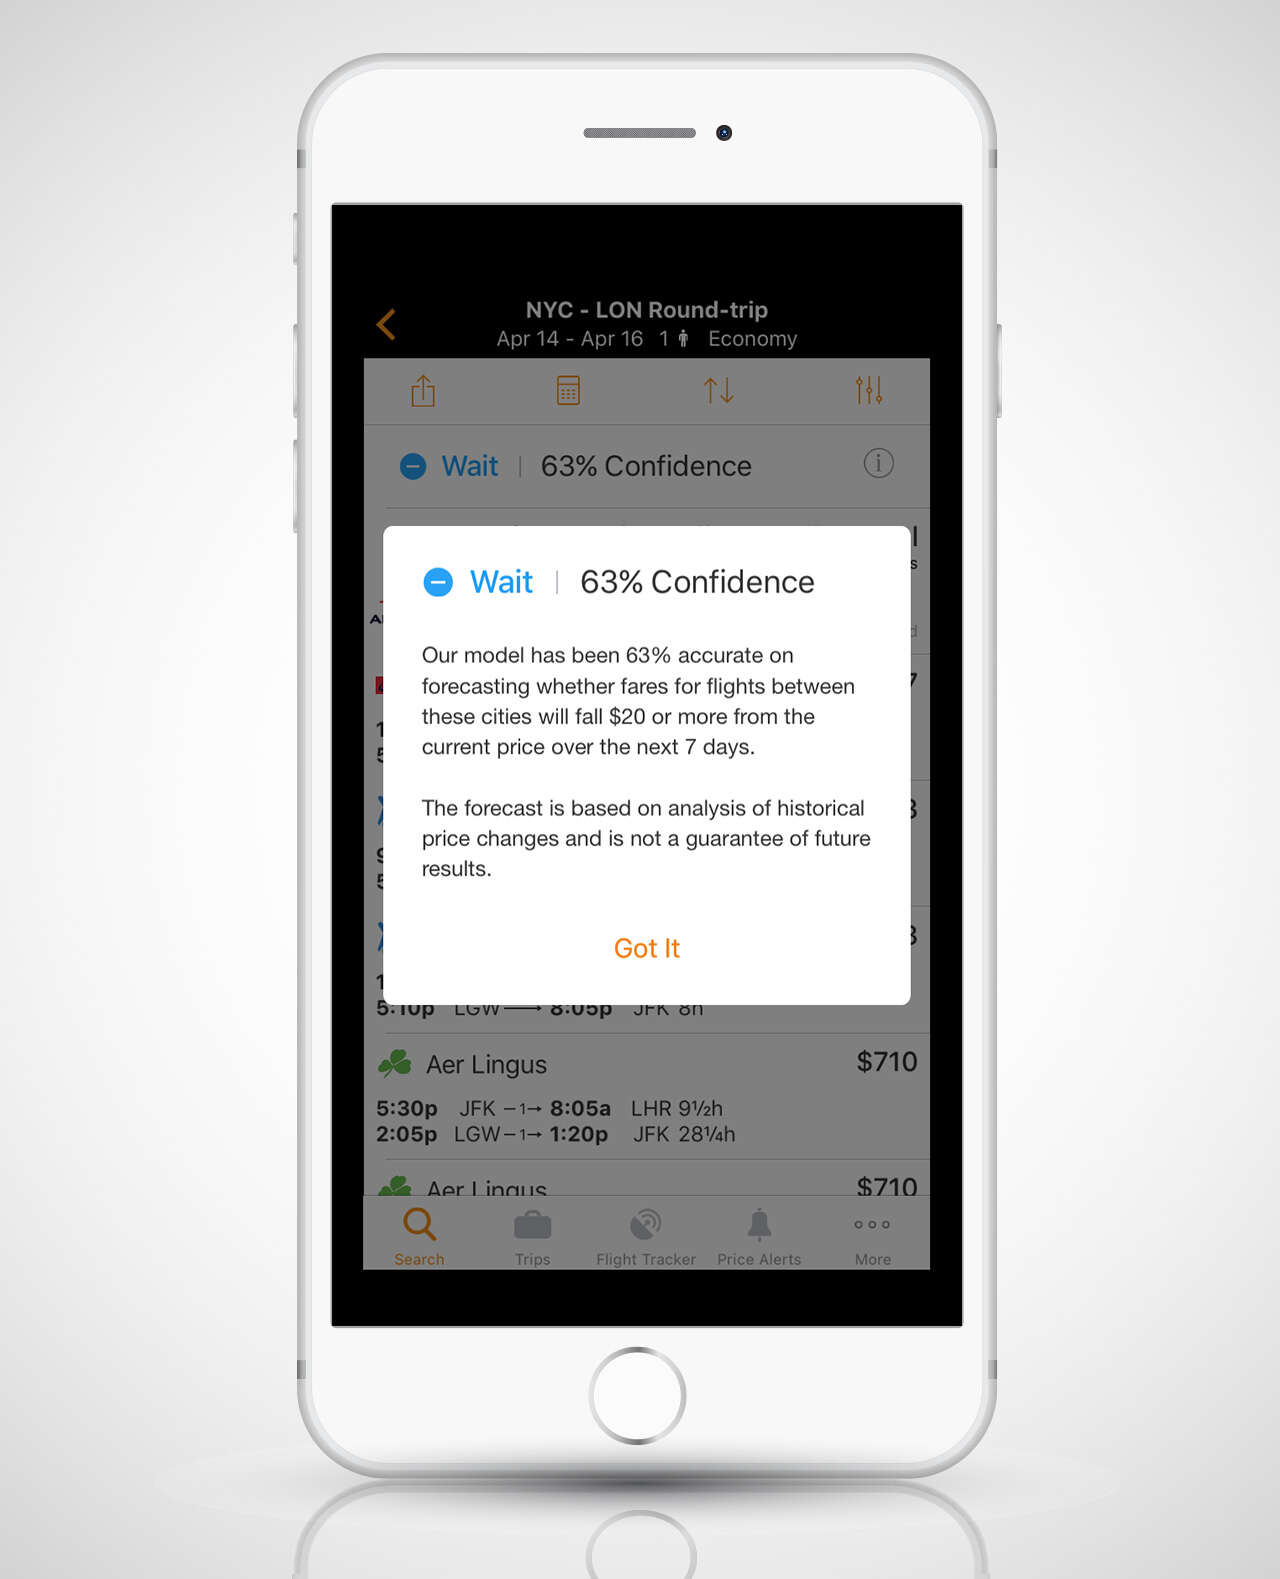 screenshot of Kayak's mobile app on iPhone 6s